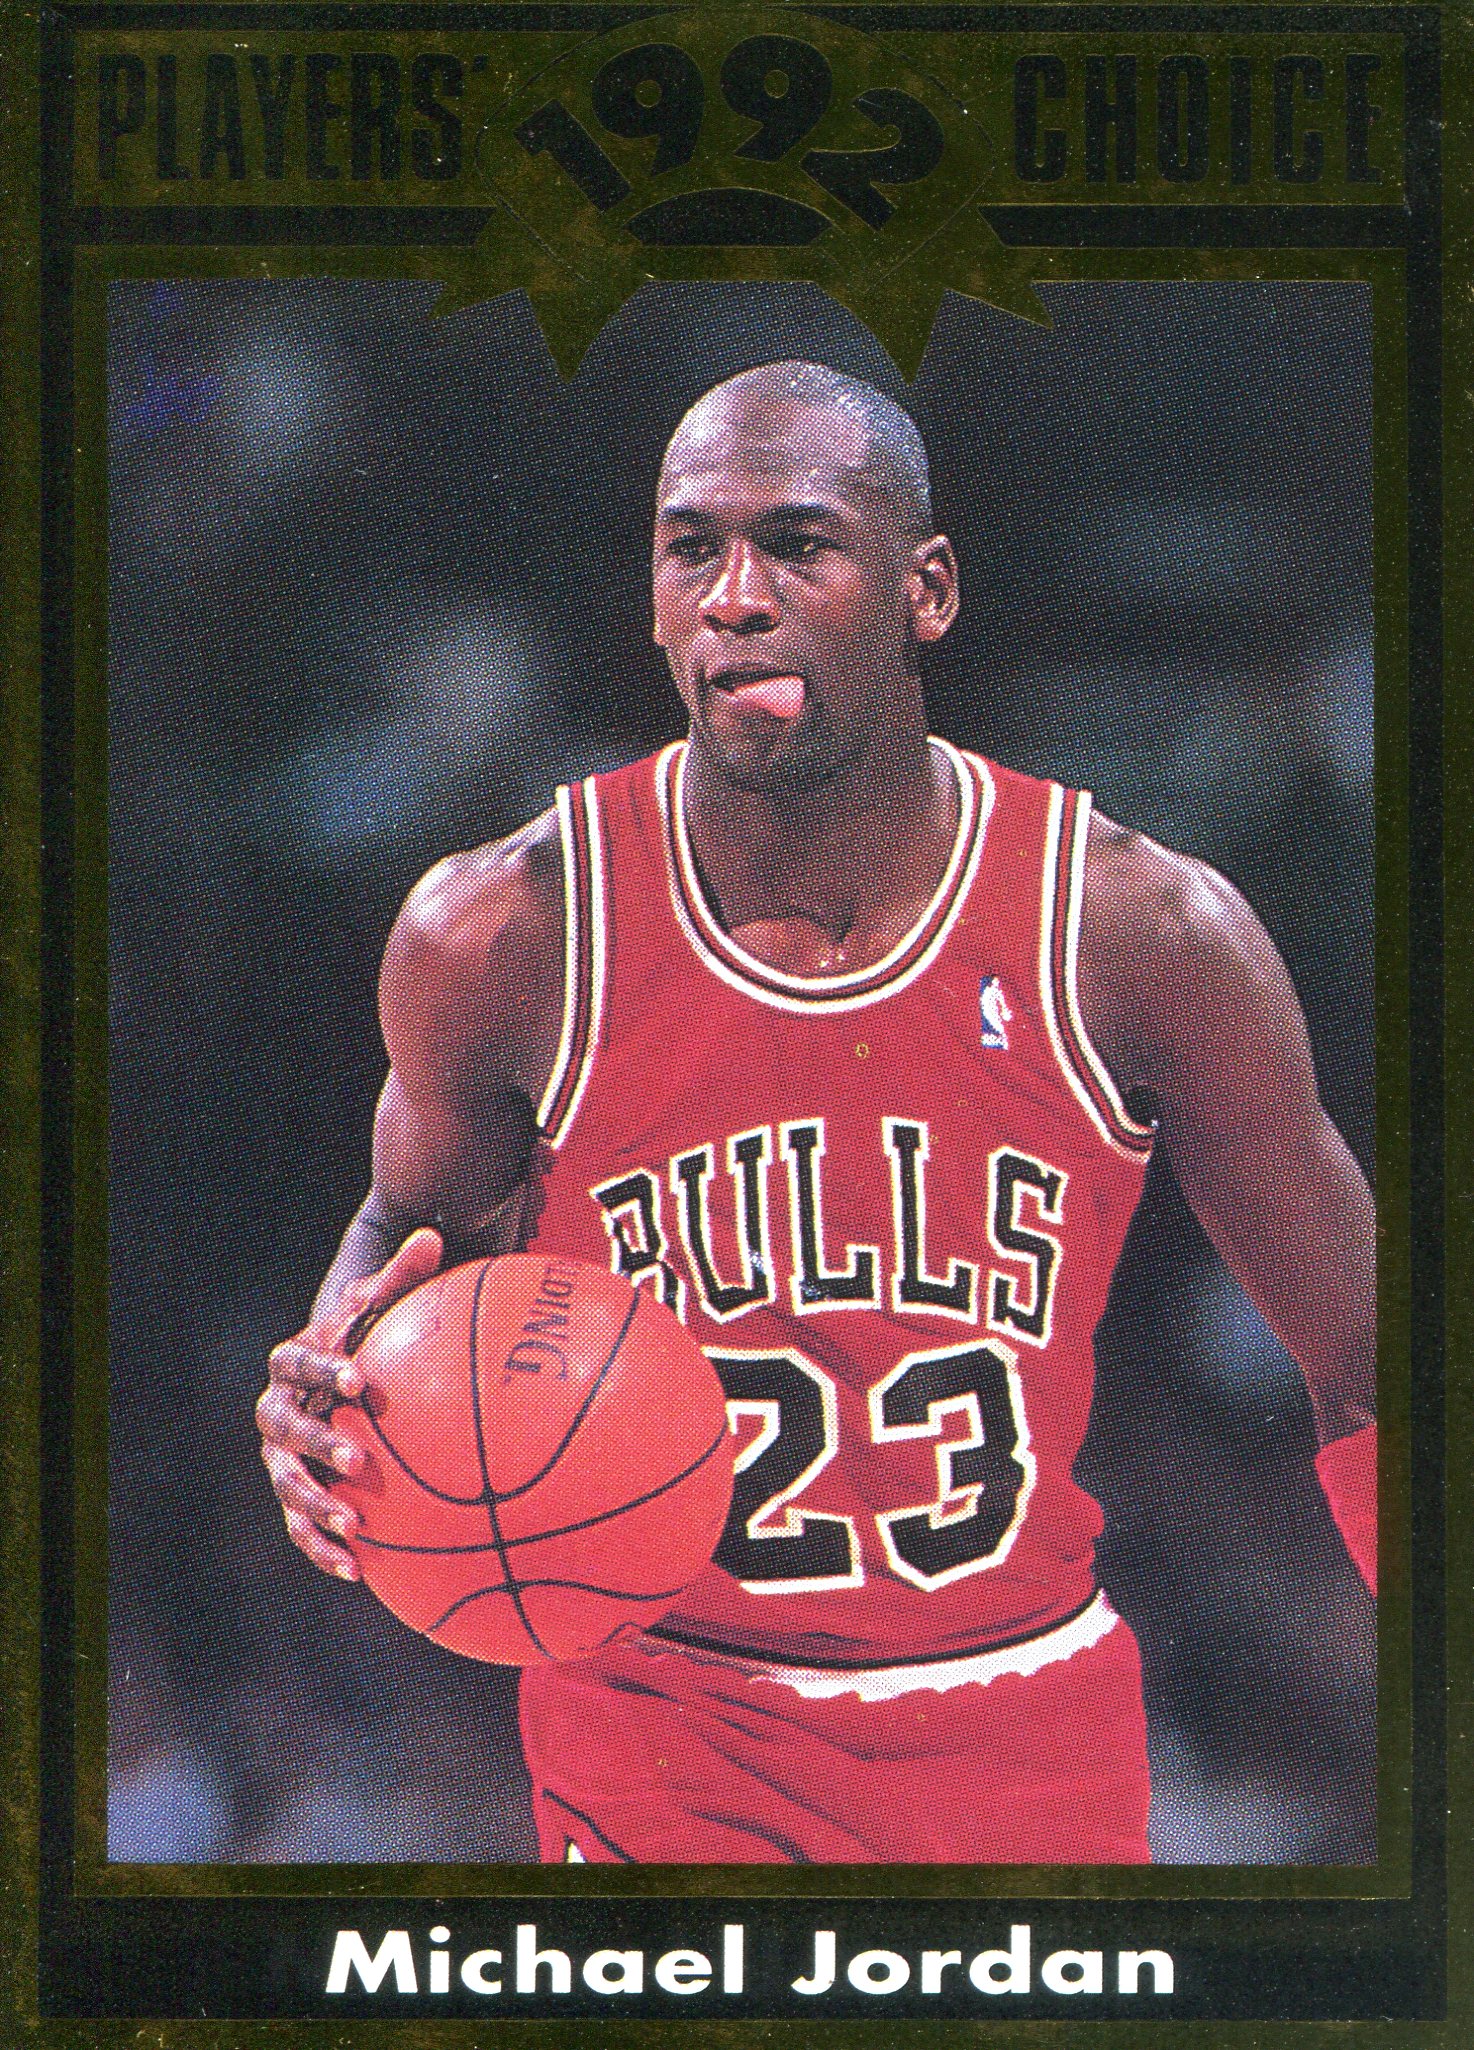 1992 Cartwright's Gold Foil Card #9 Michael Jordan